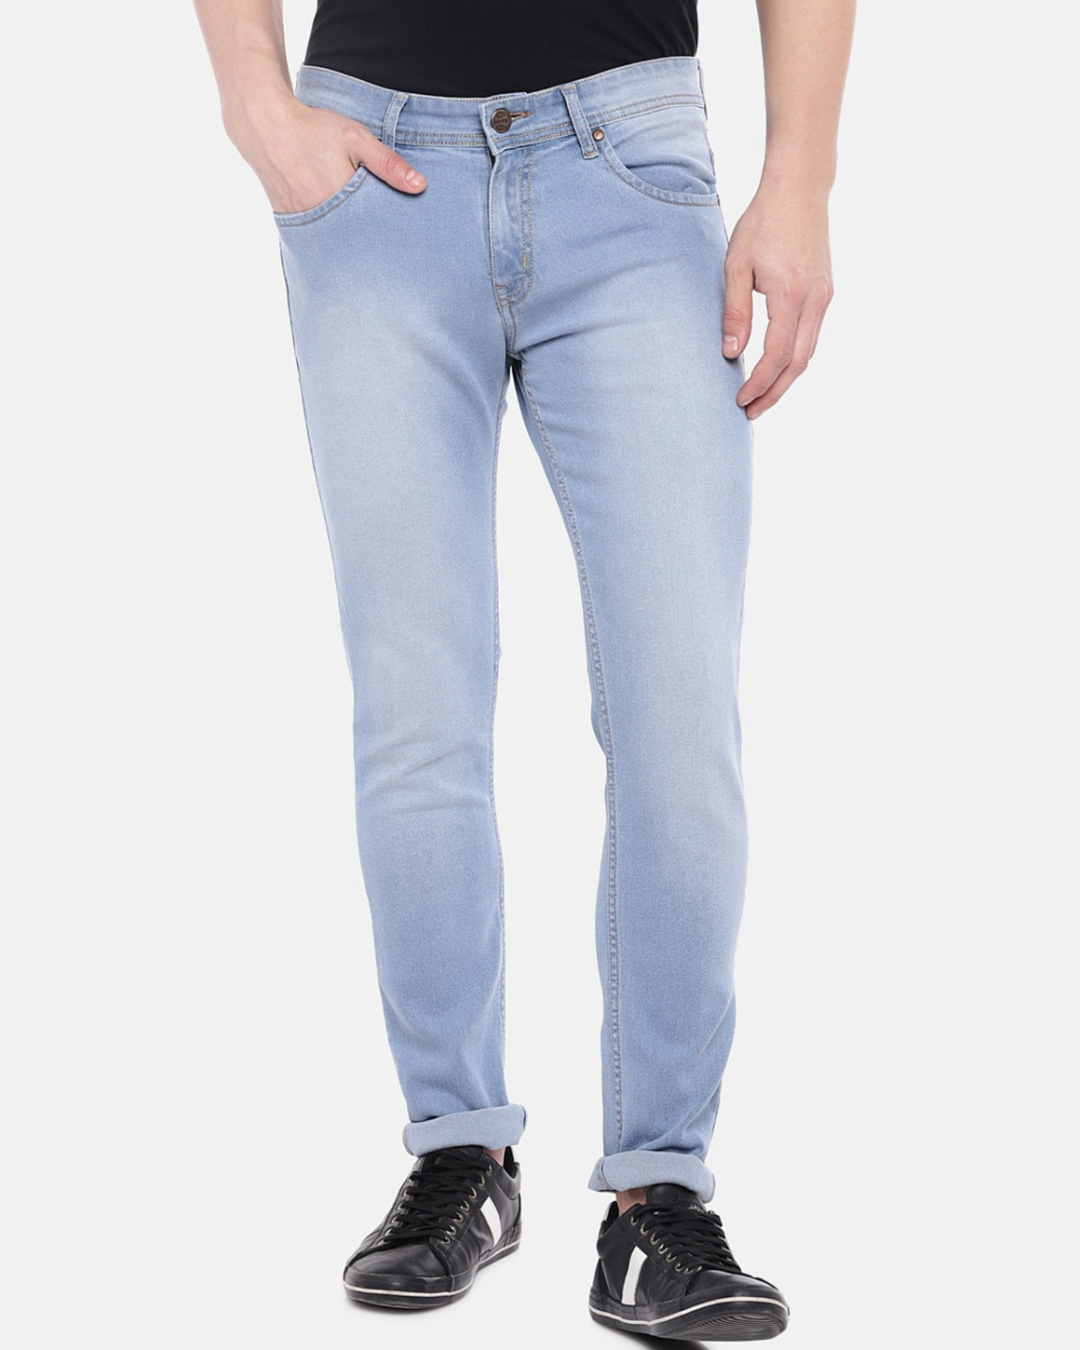 Buy Men S Blue Slim Fit Faded Jeans Online At Bewakoof